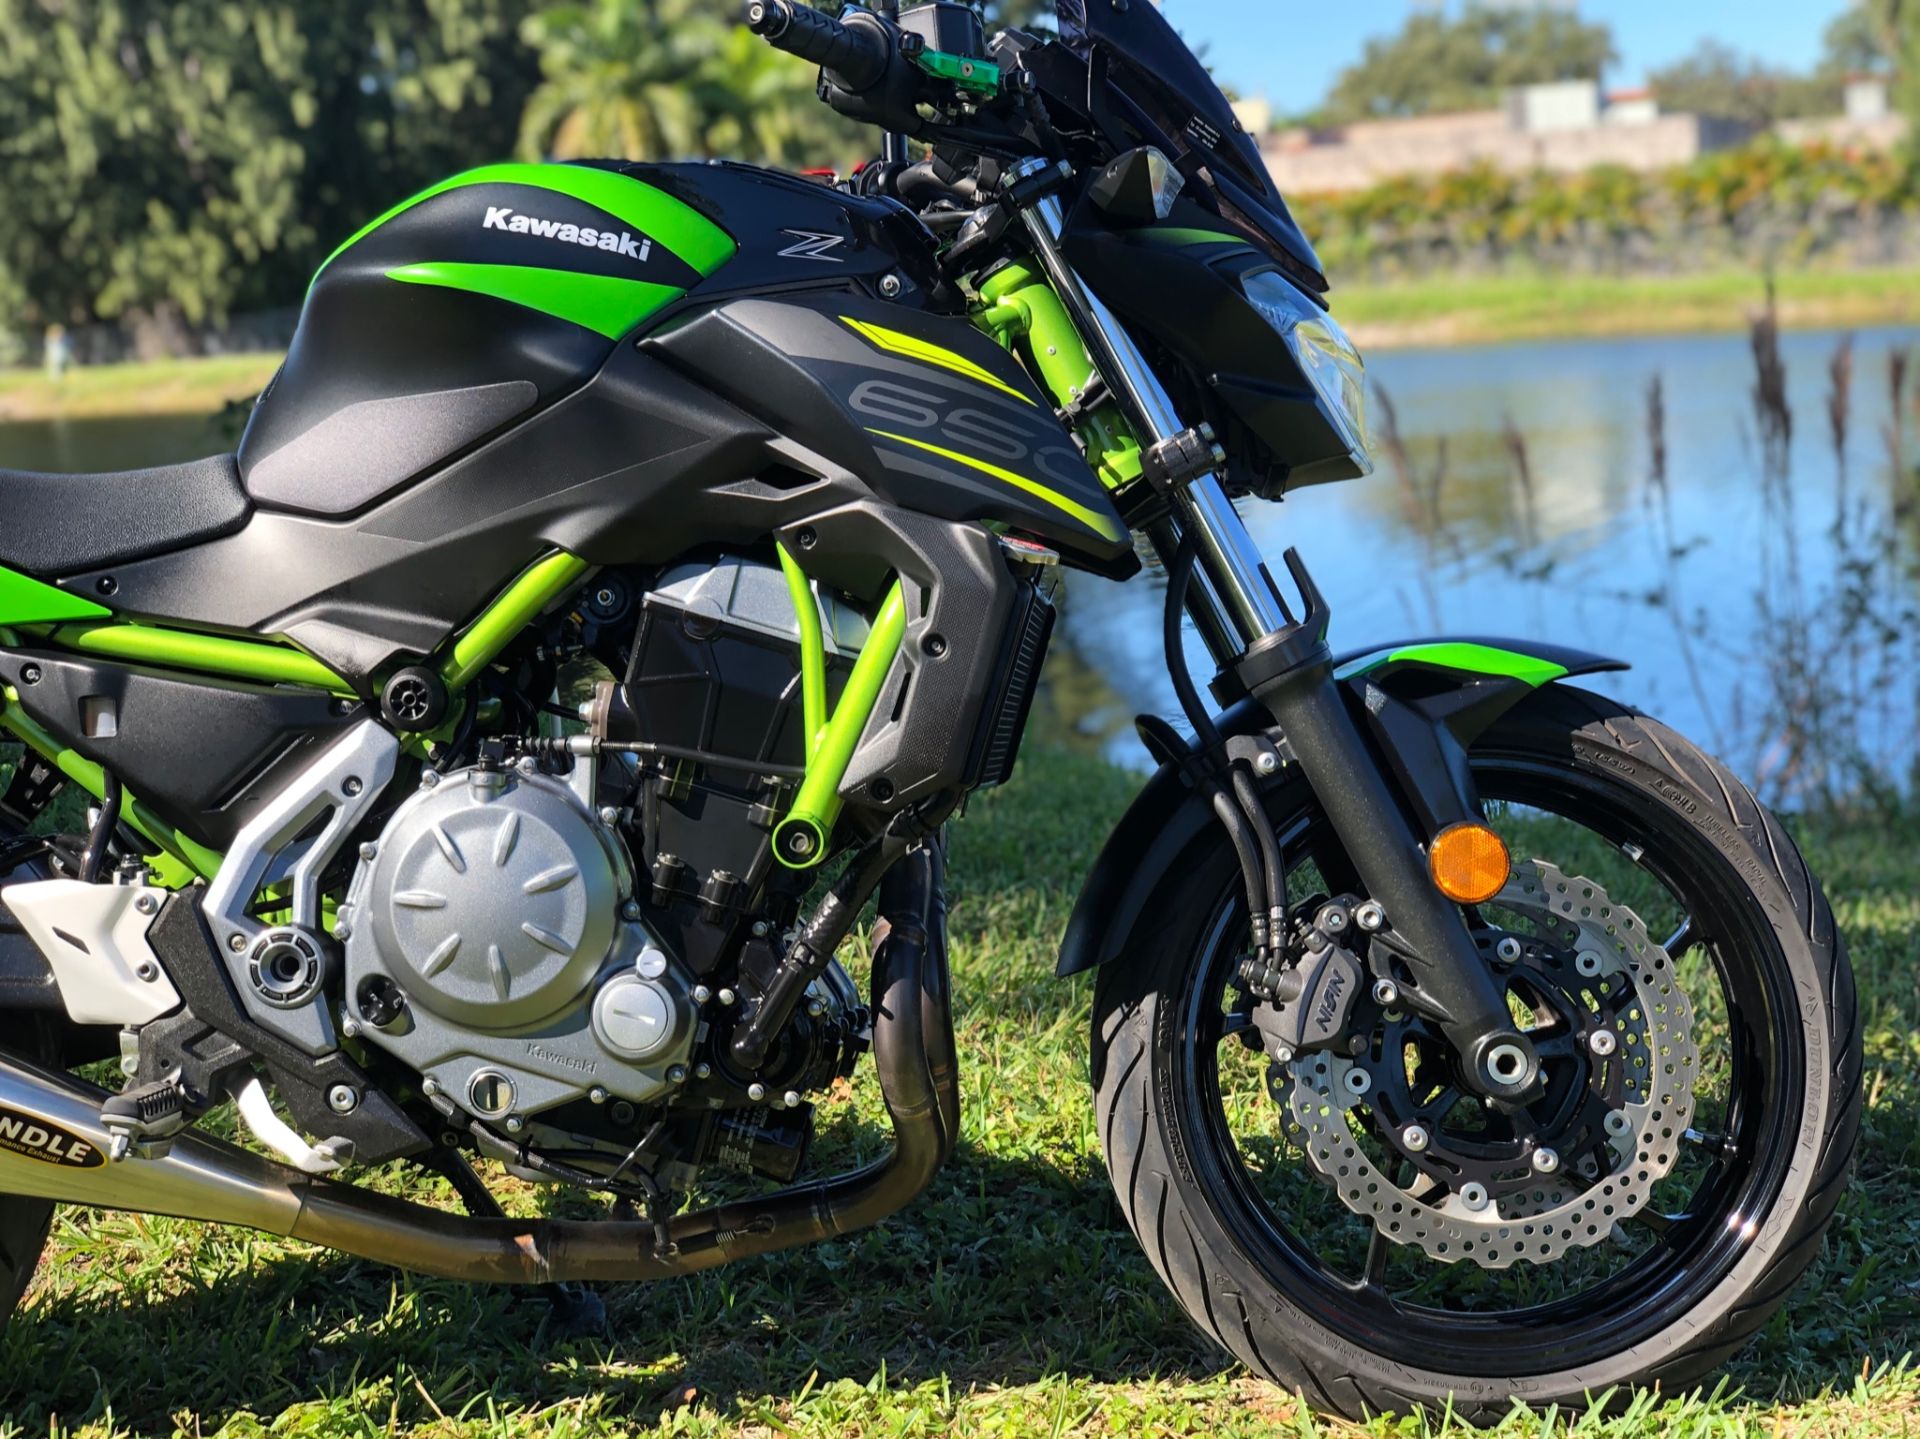 2019 Kawasaki Z650 in North Miami Beach, Florida - Photo 4